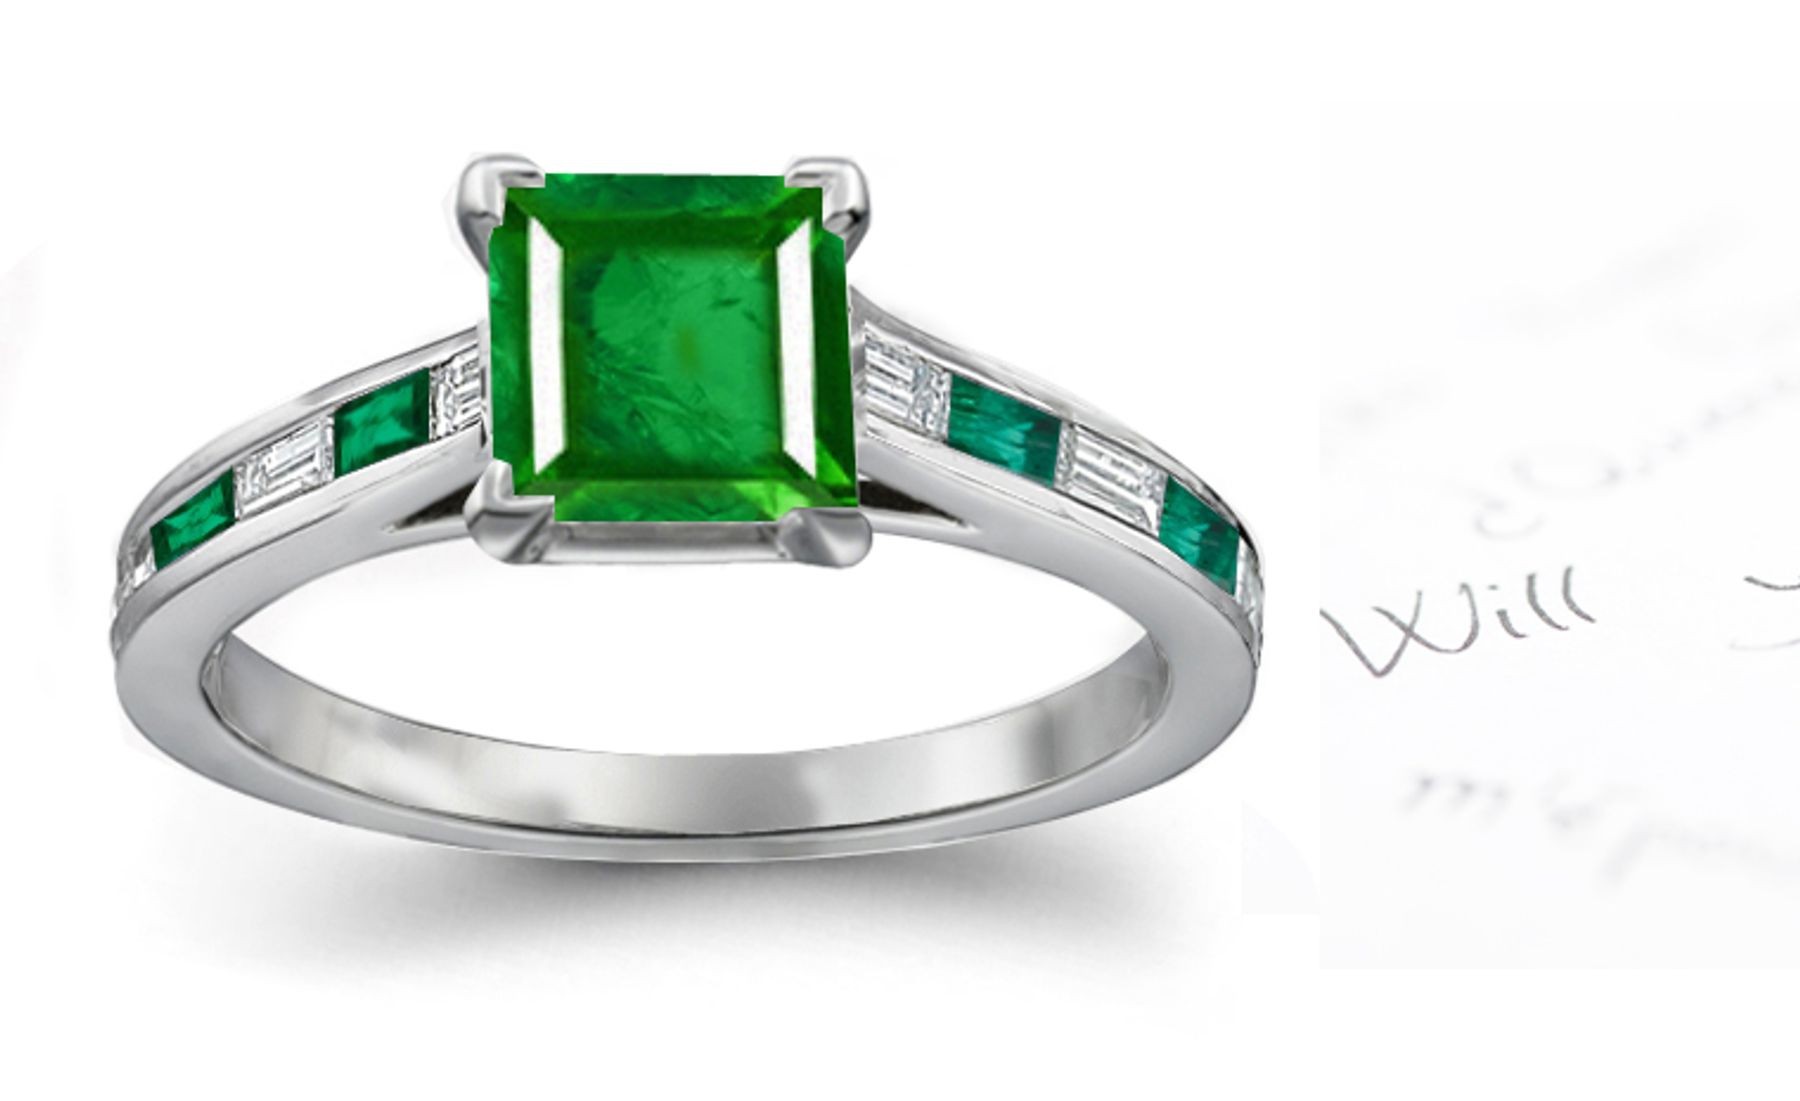 Zodiacal Princess Cut Emerald atop Baguette Emerald & DiamondDevine Yellow Gold Ring